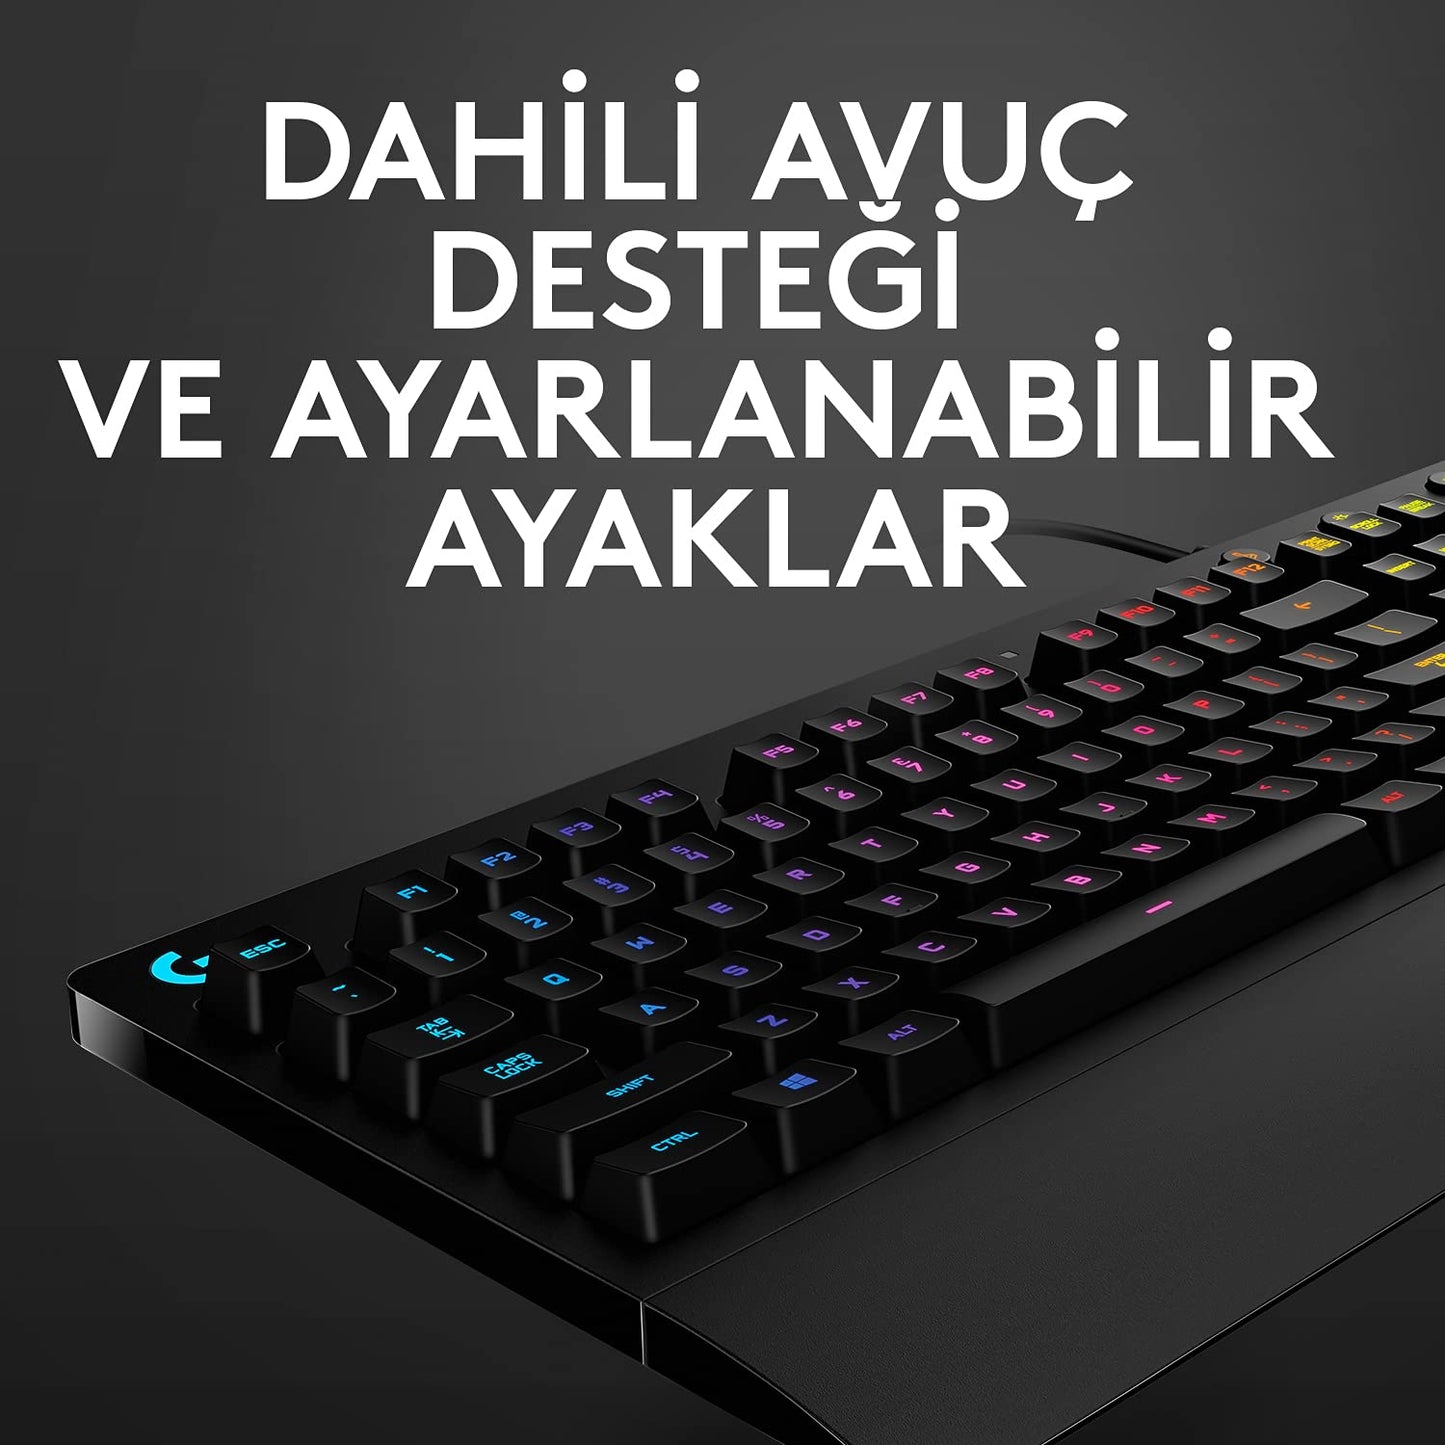 Logitech G G213 RGB Wired Gaming Keyboard, LIGHTSYNC Technology, Spill Resistant, Dedicated Media Controls, Turkish Q Keyboard, Black